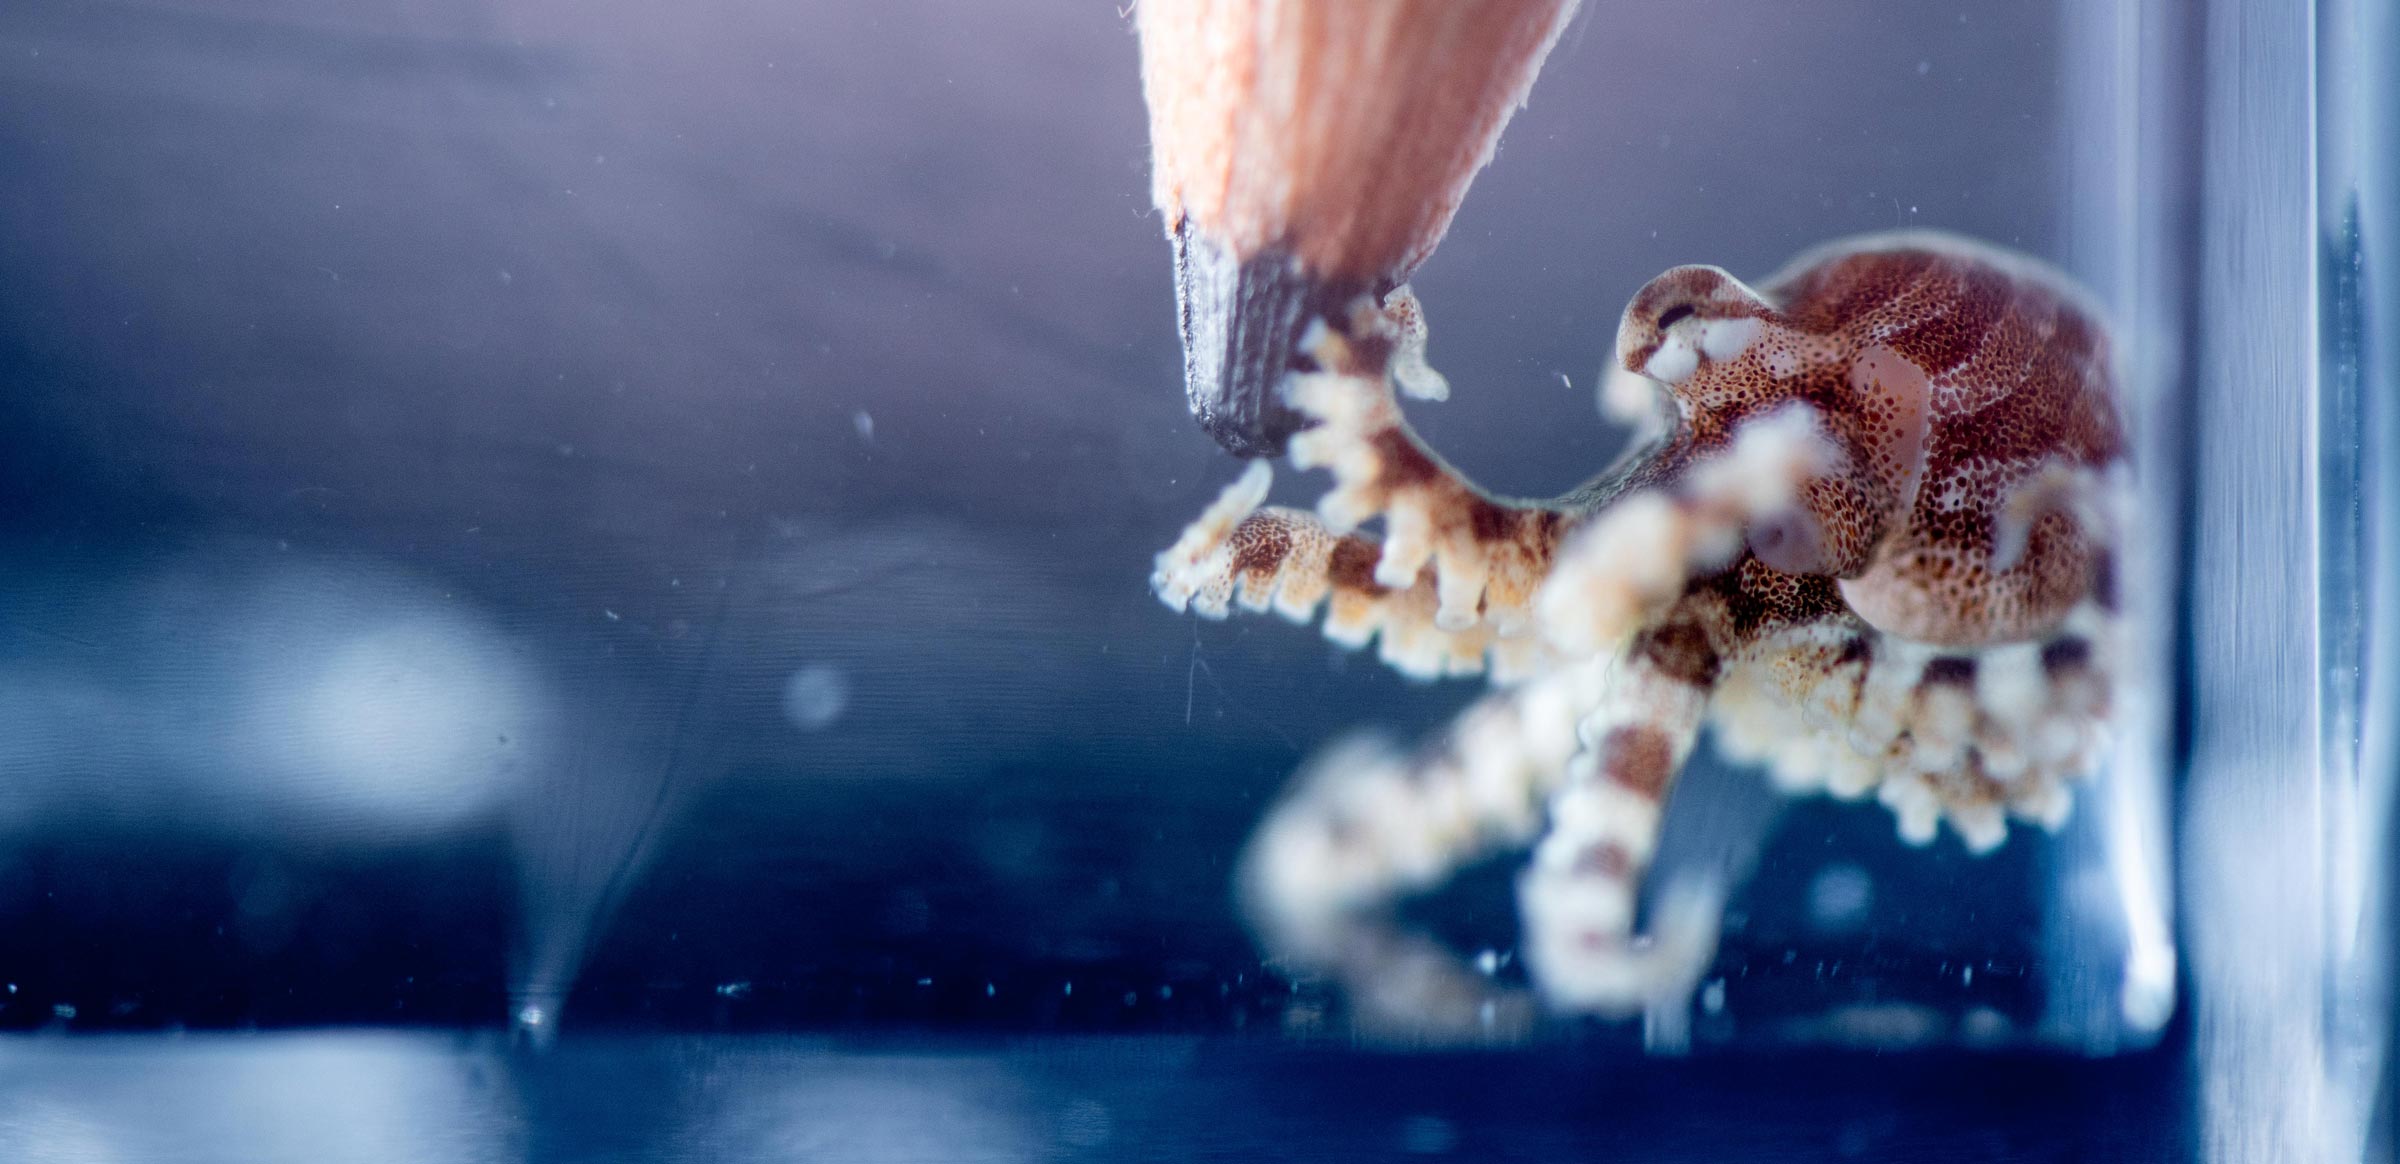 A pencil near a striped octopus